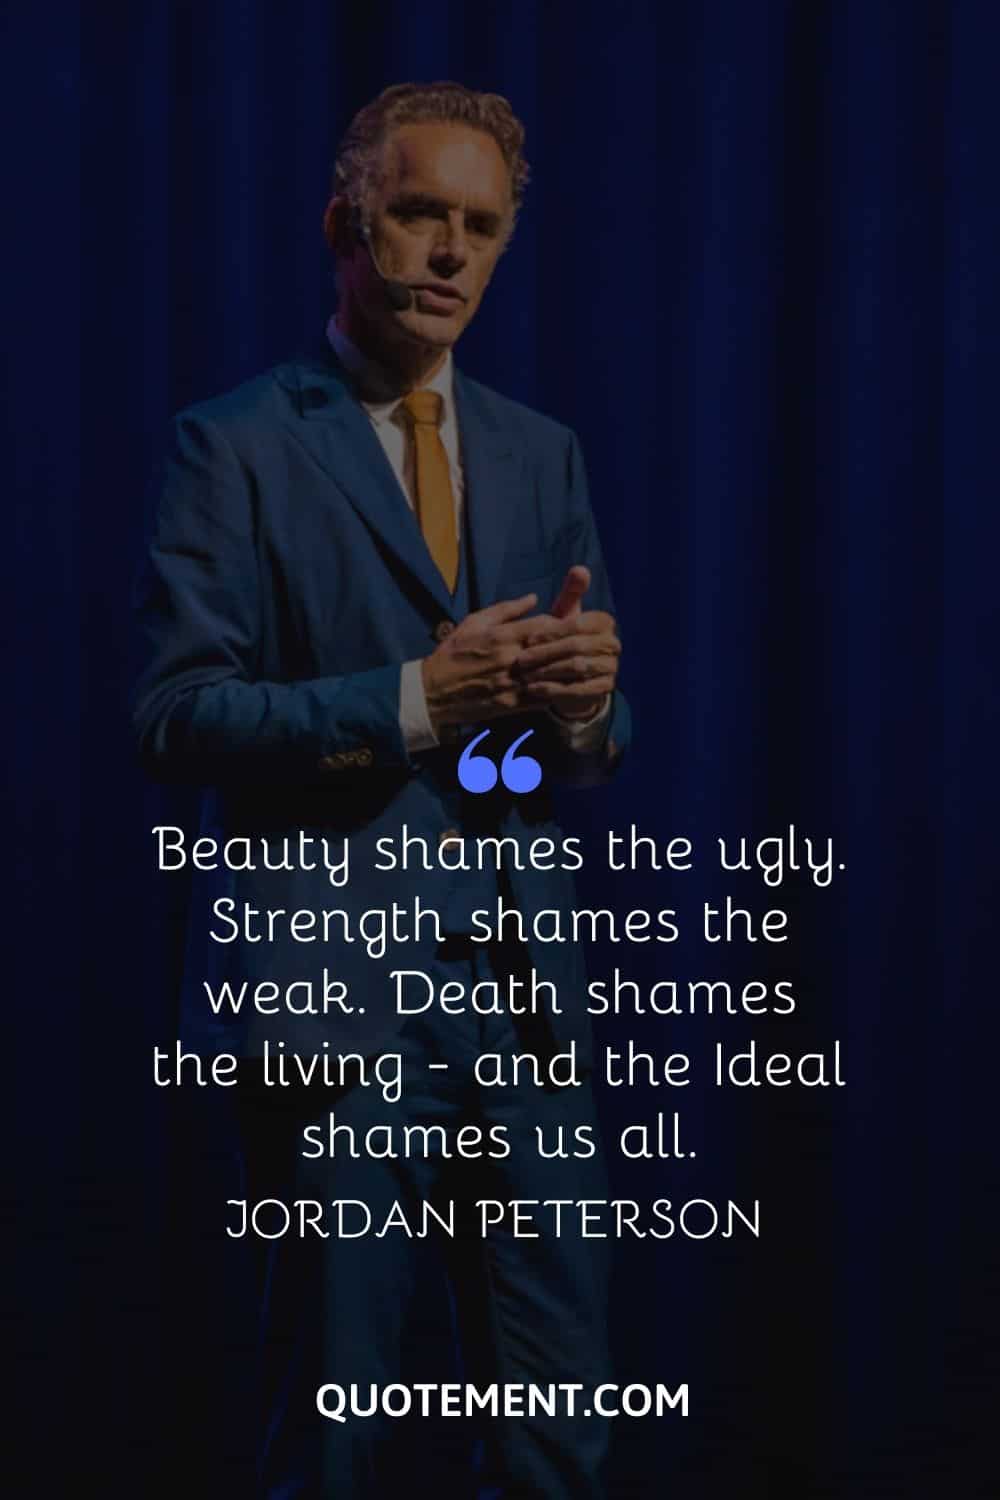 “Beauty shames the ugly. Strength shames the weak. Death shames the living - and the Ideal shames us all.” — Jordan Peterson